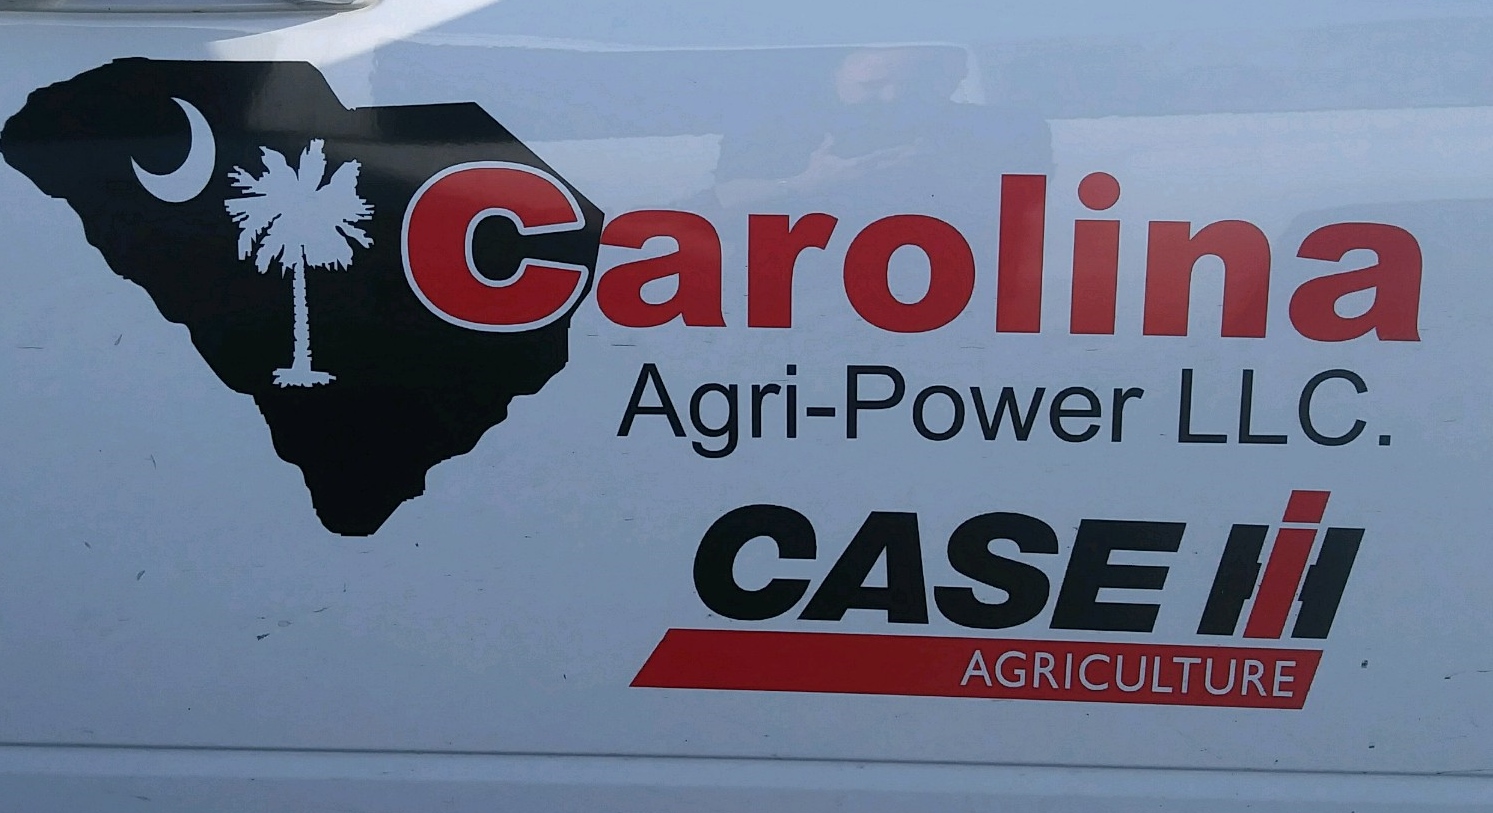 Carolina Agri-Power